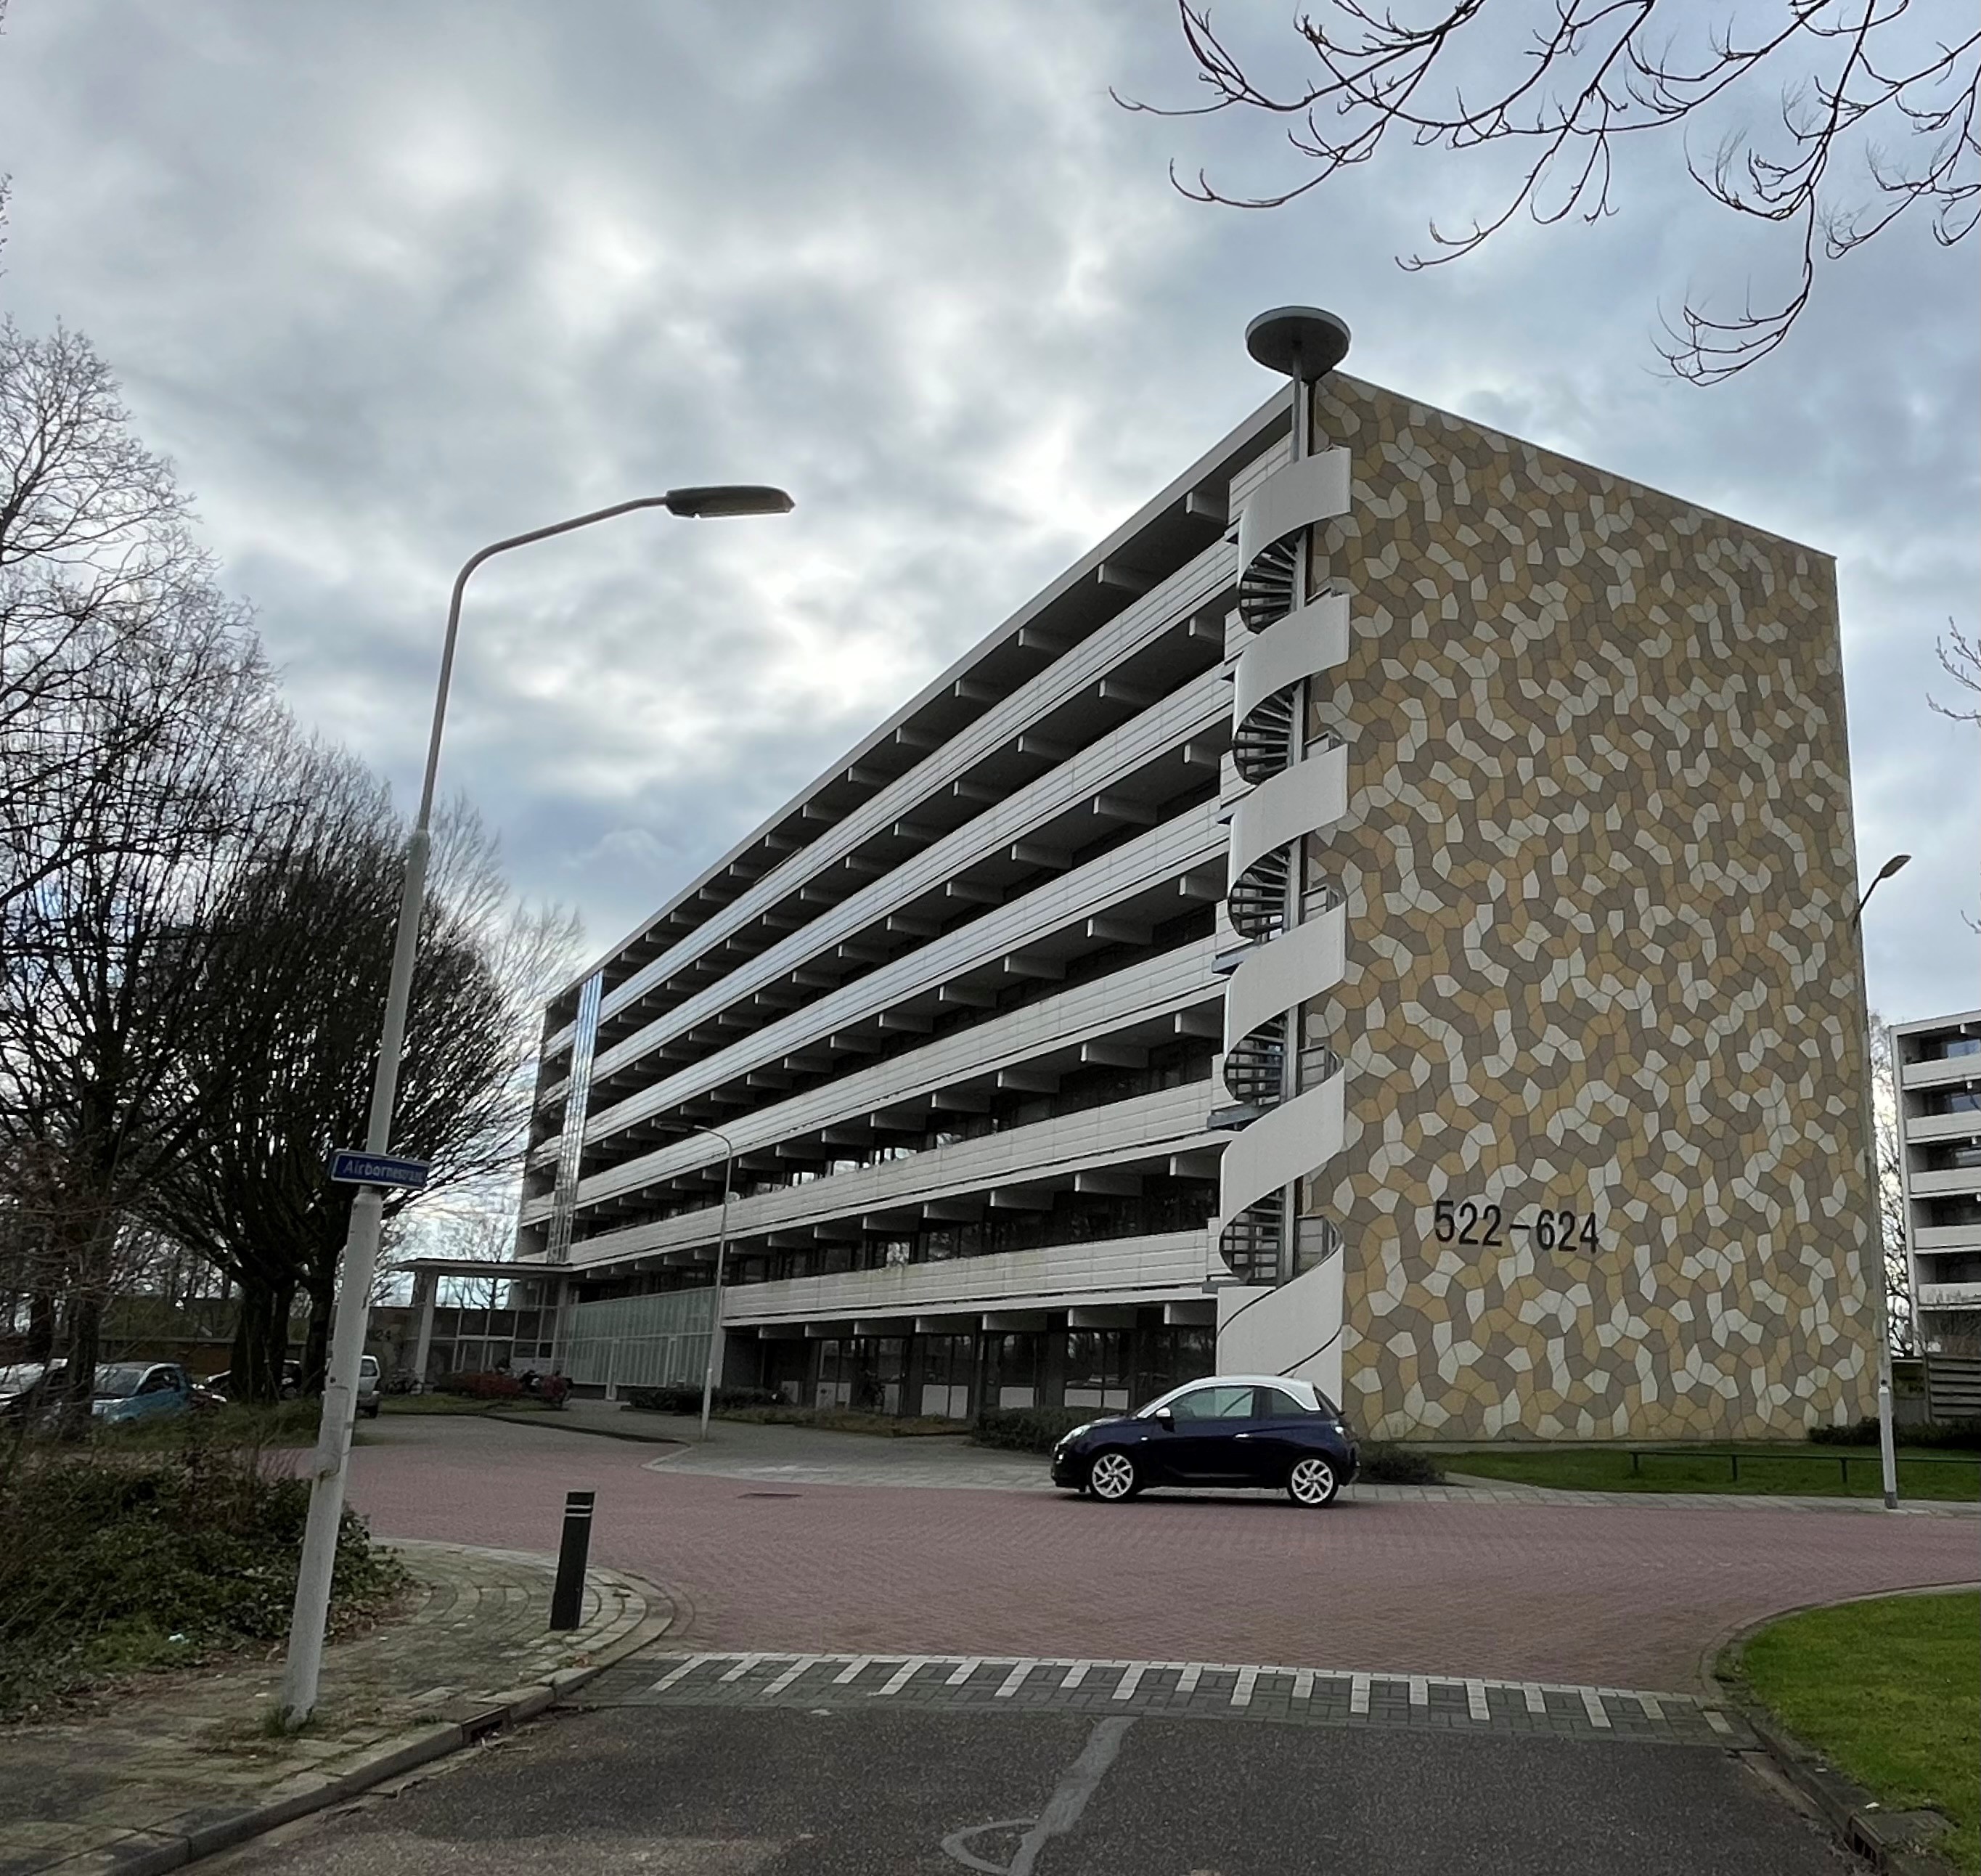 Caenstraat 530, 7002 GV Doetinchem, Nederland